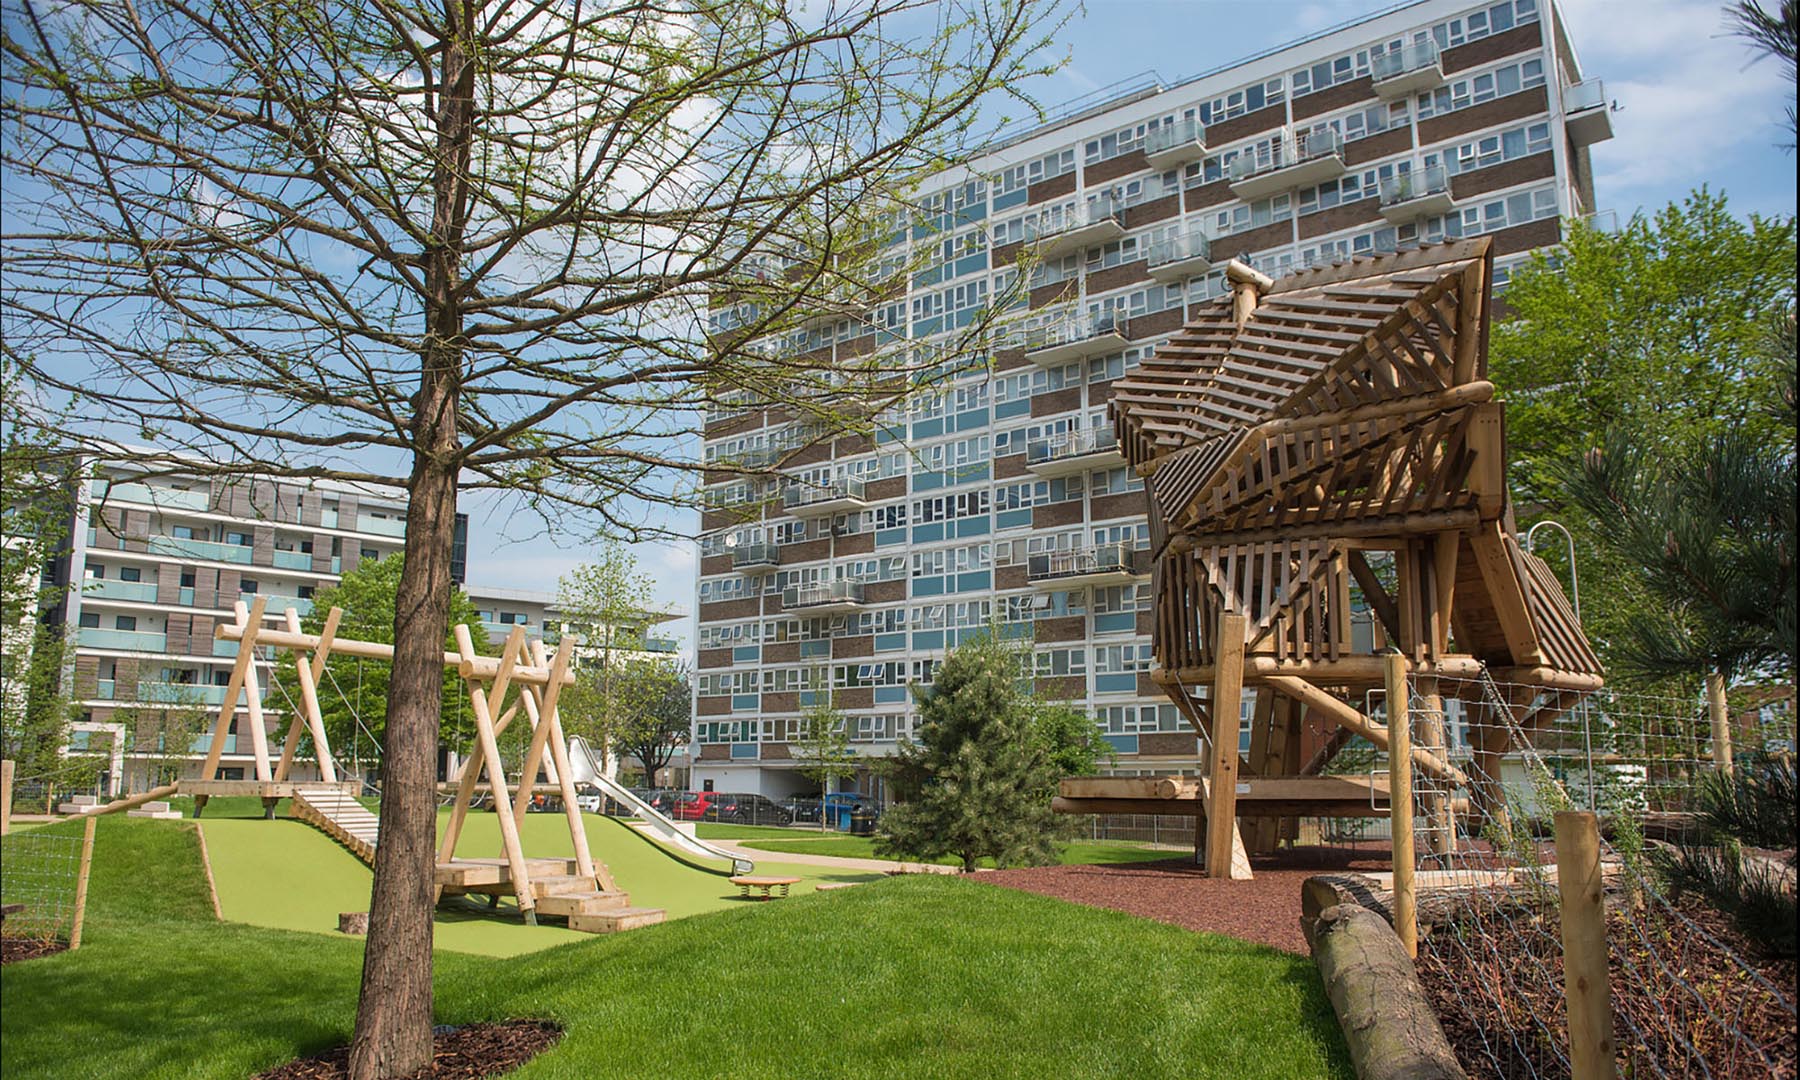 bespoke playgrounds woodhouse urban park